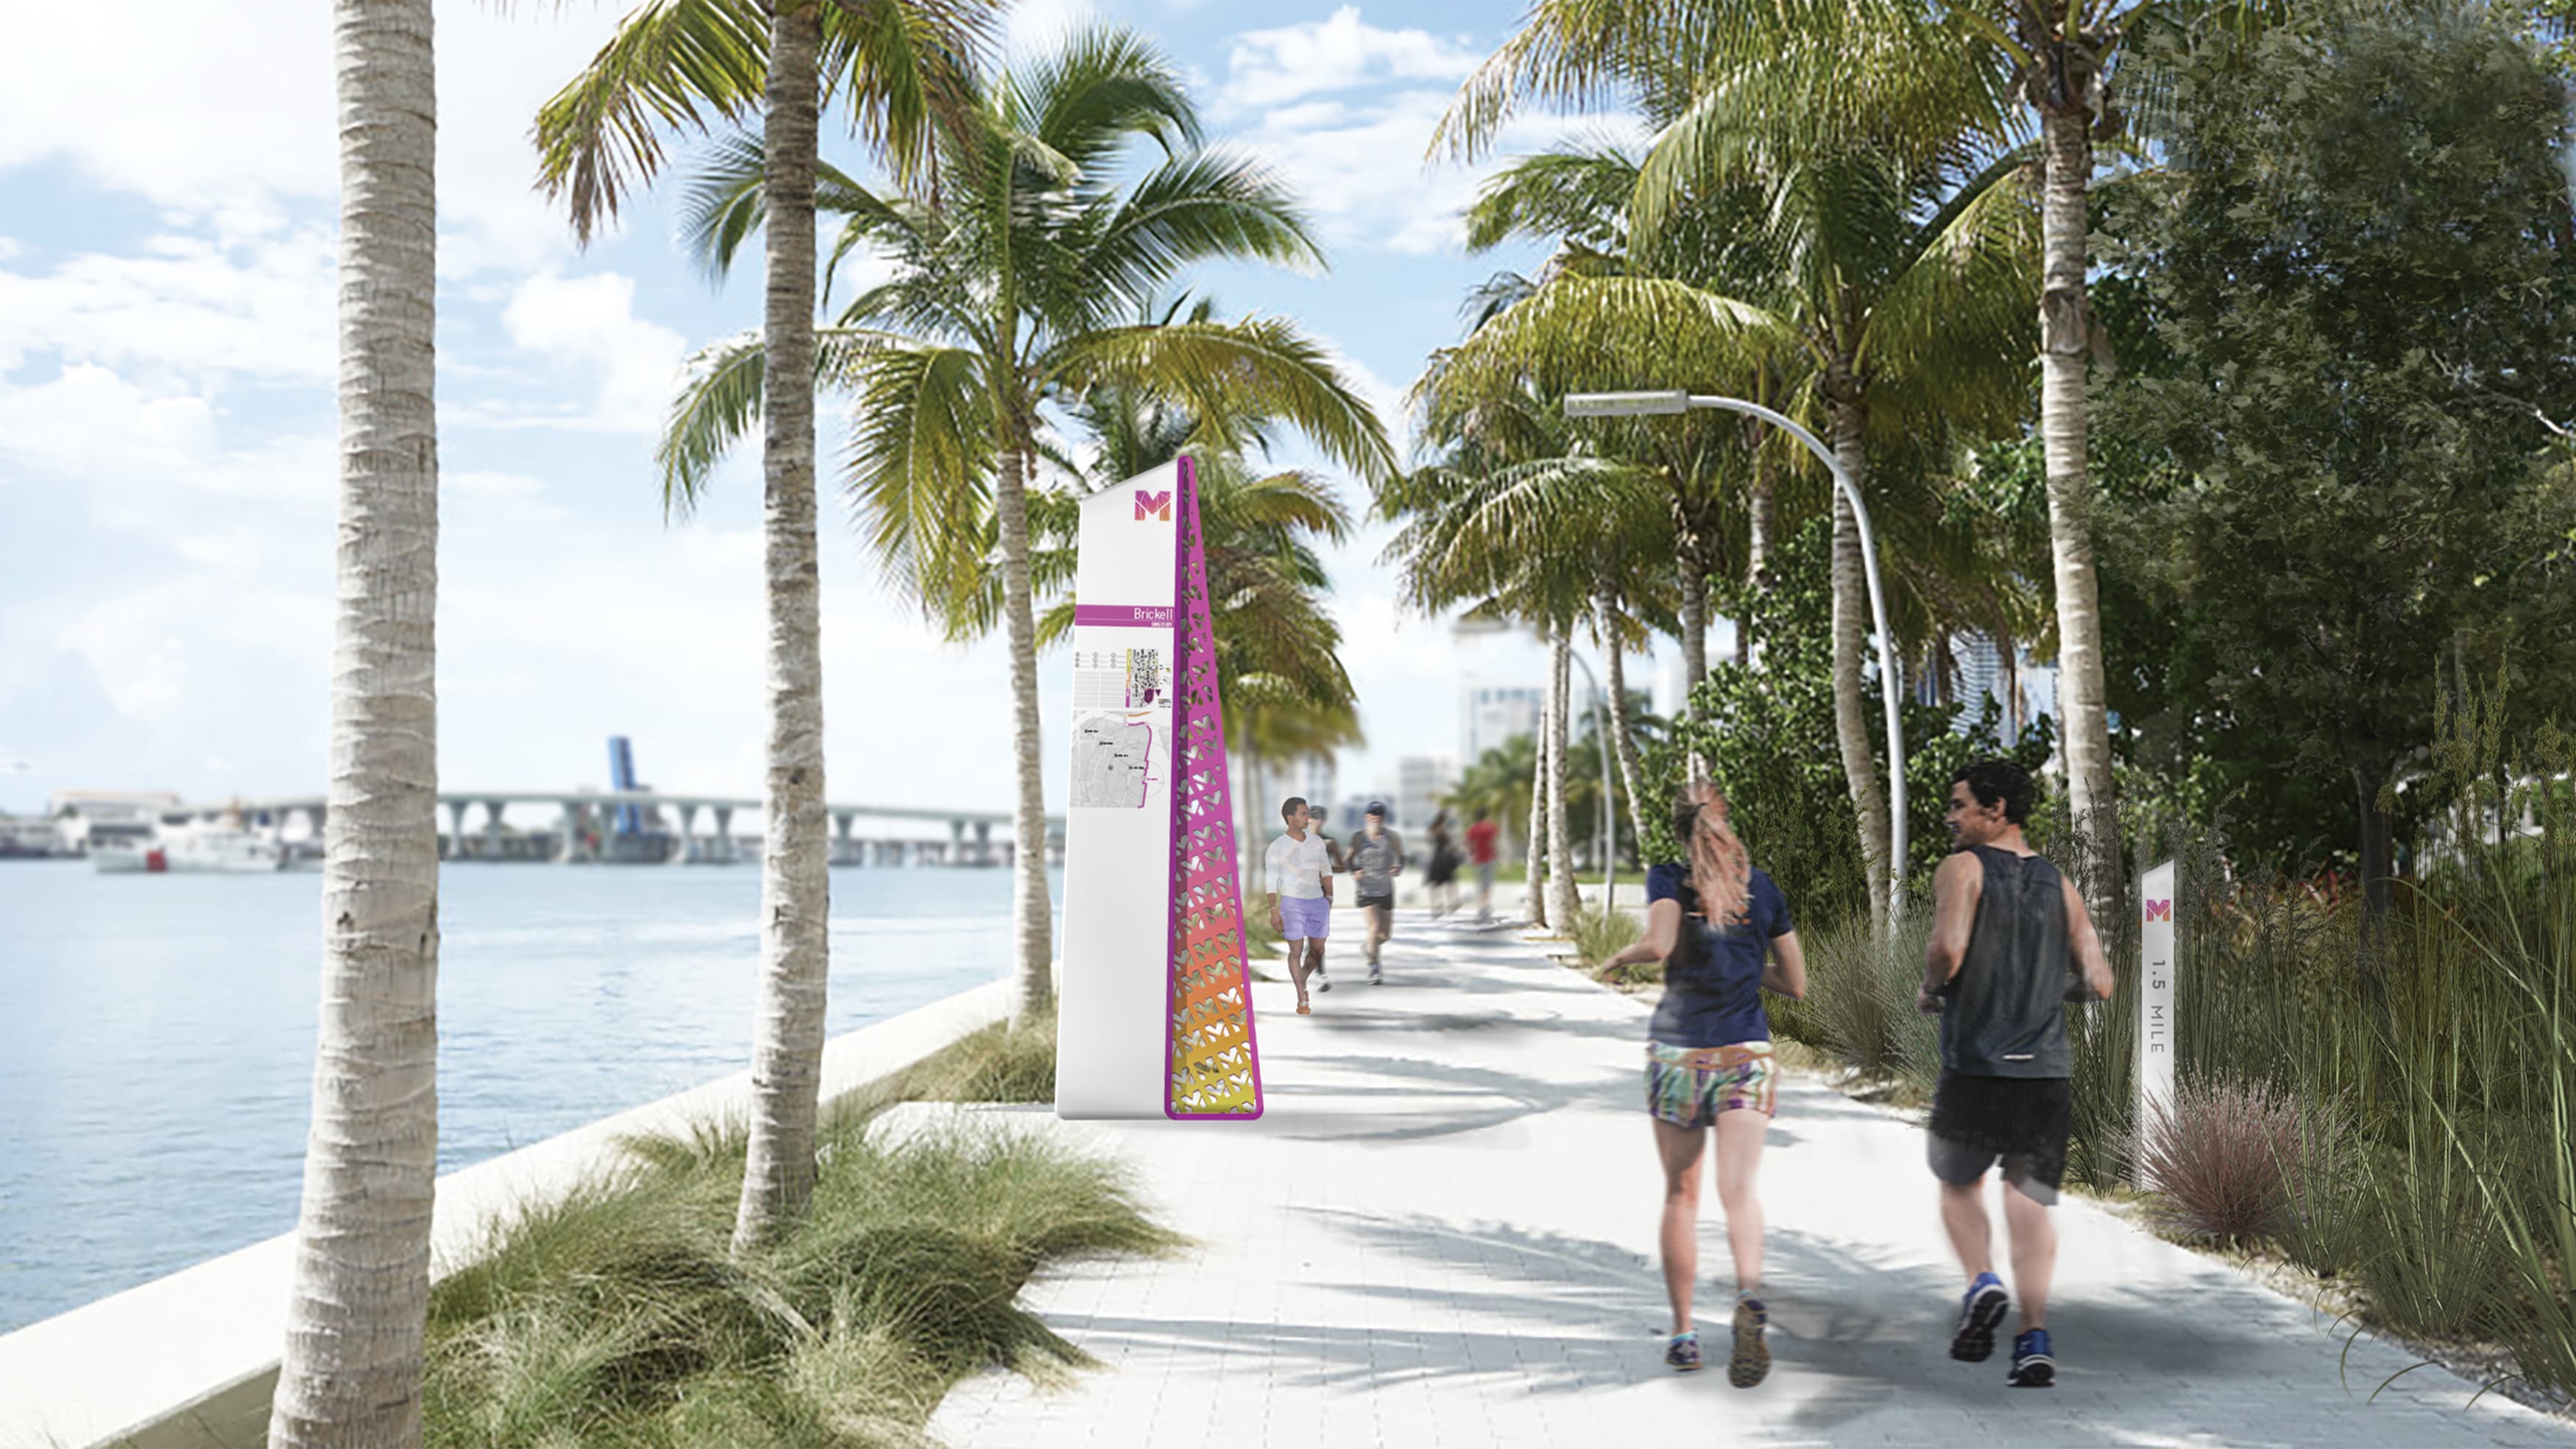 Wayfinding signage along the waterfront walkway of Miami Baywalk.